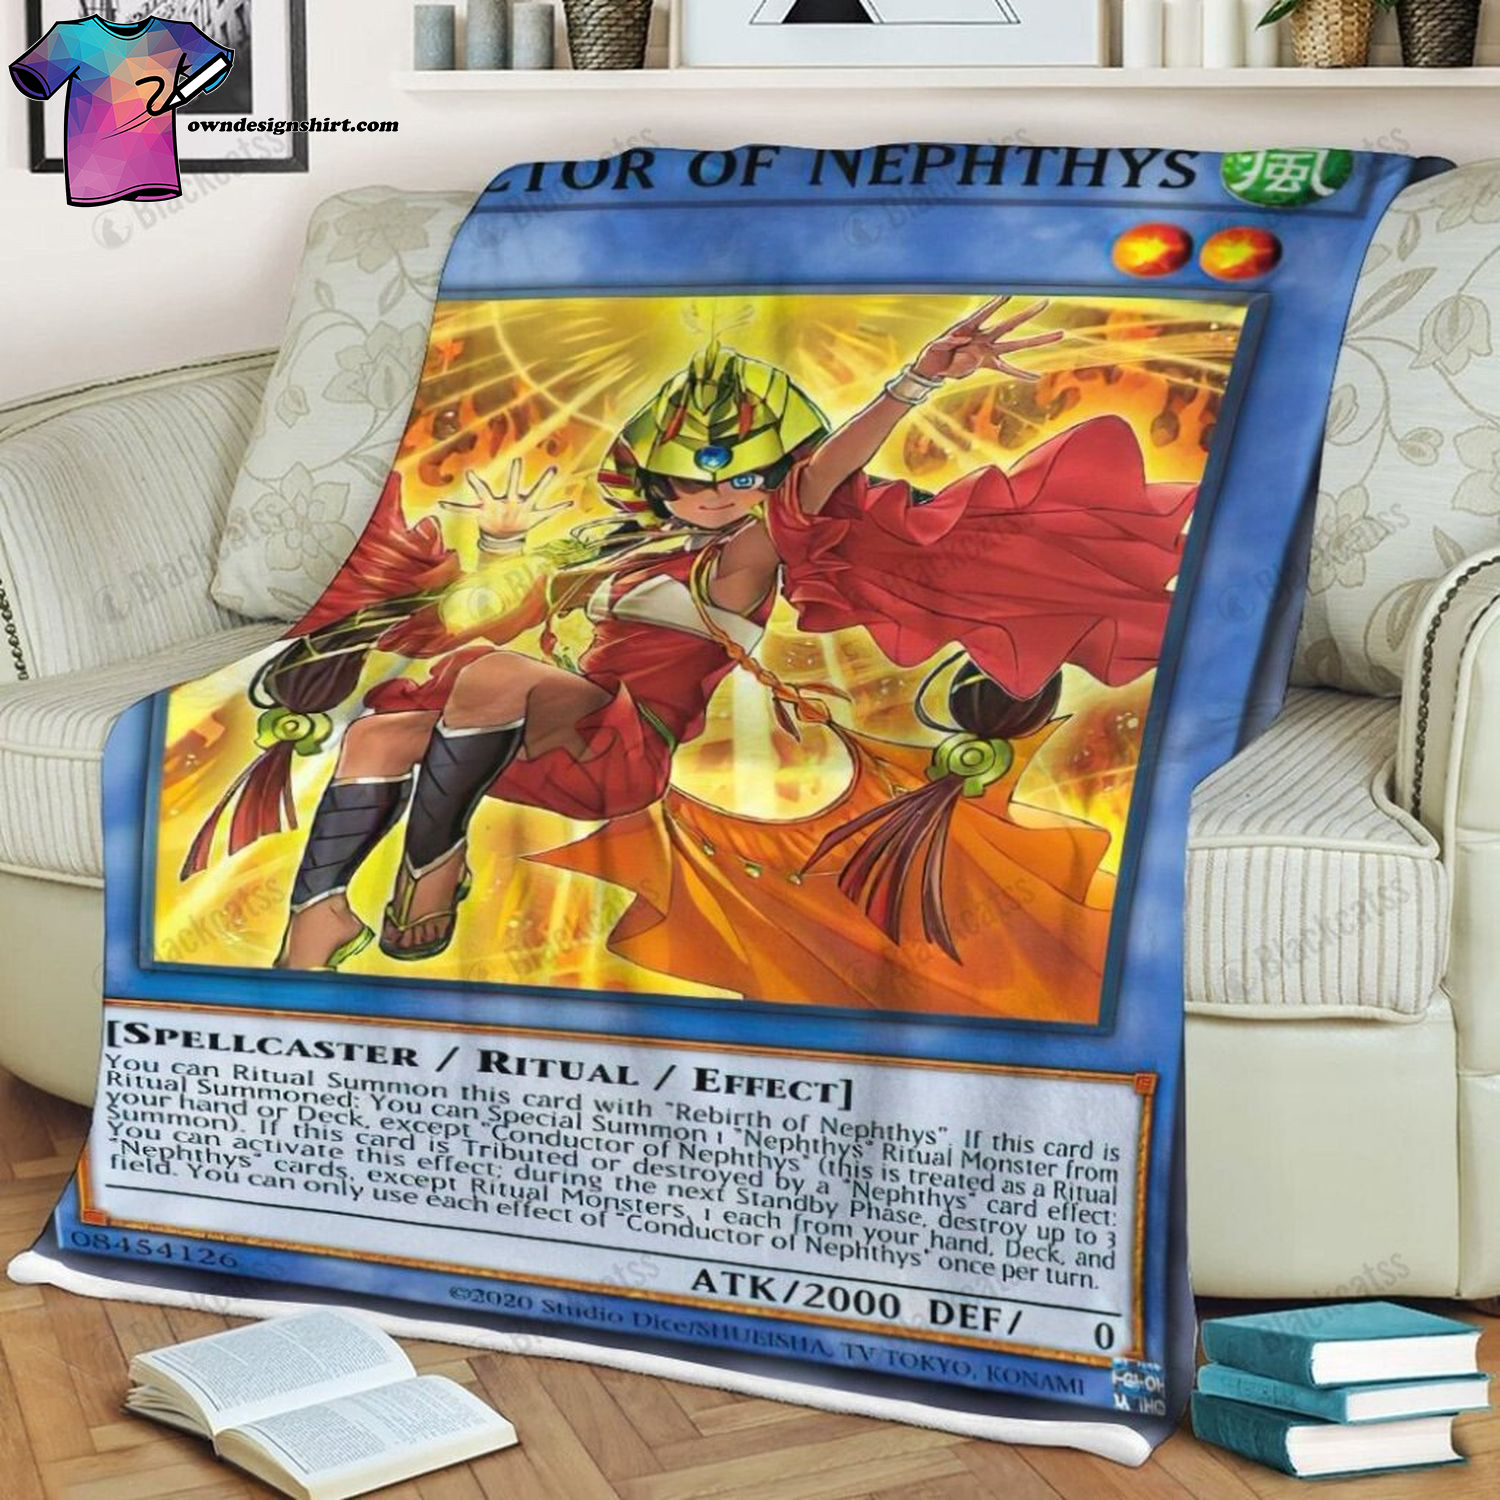 Game Yu-gi-oh Conductor of Nephthys Full Print Soft Blanket